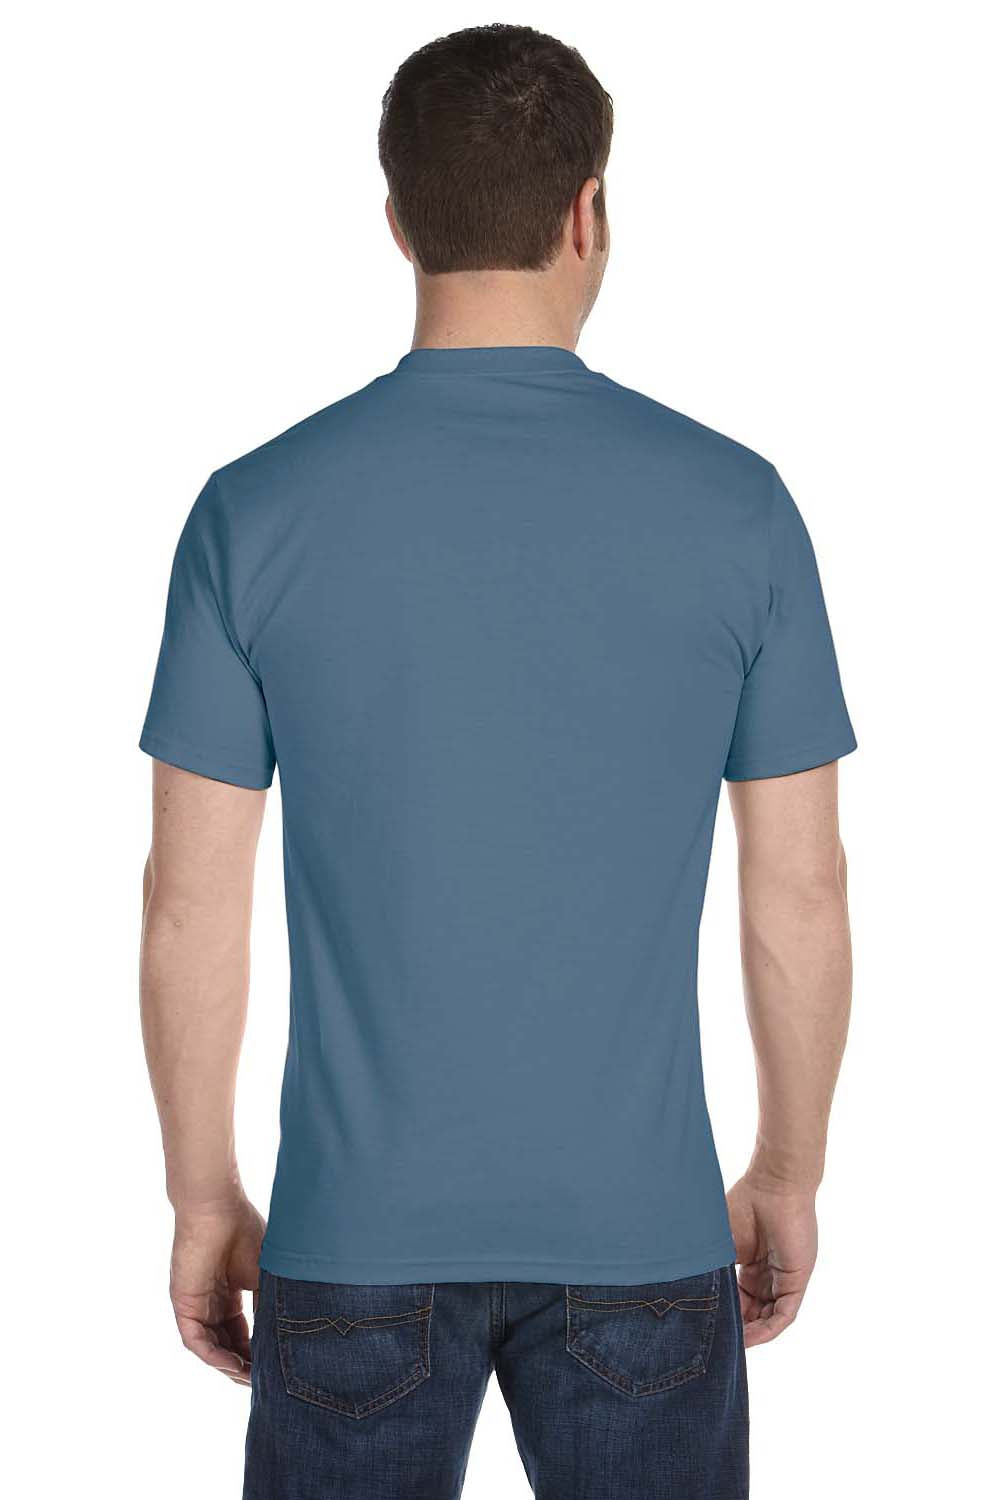 Hanes 5280 Mens ComfortSoft Short Sleeve Crewneck T-Shirt Denim Blue Back